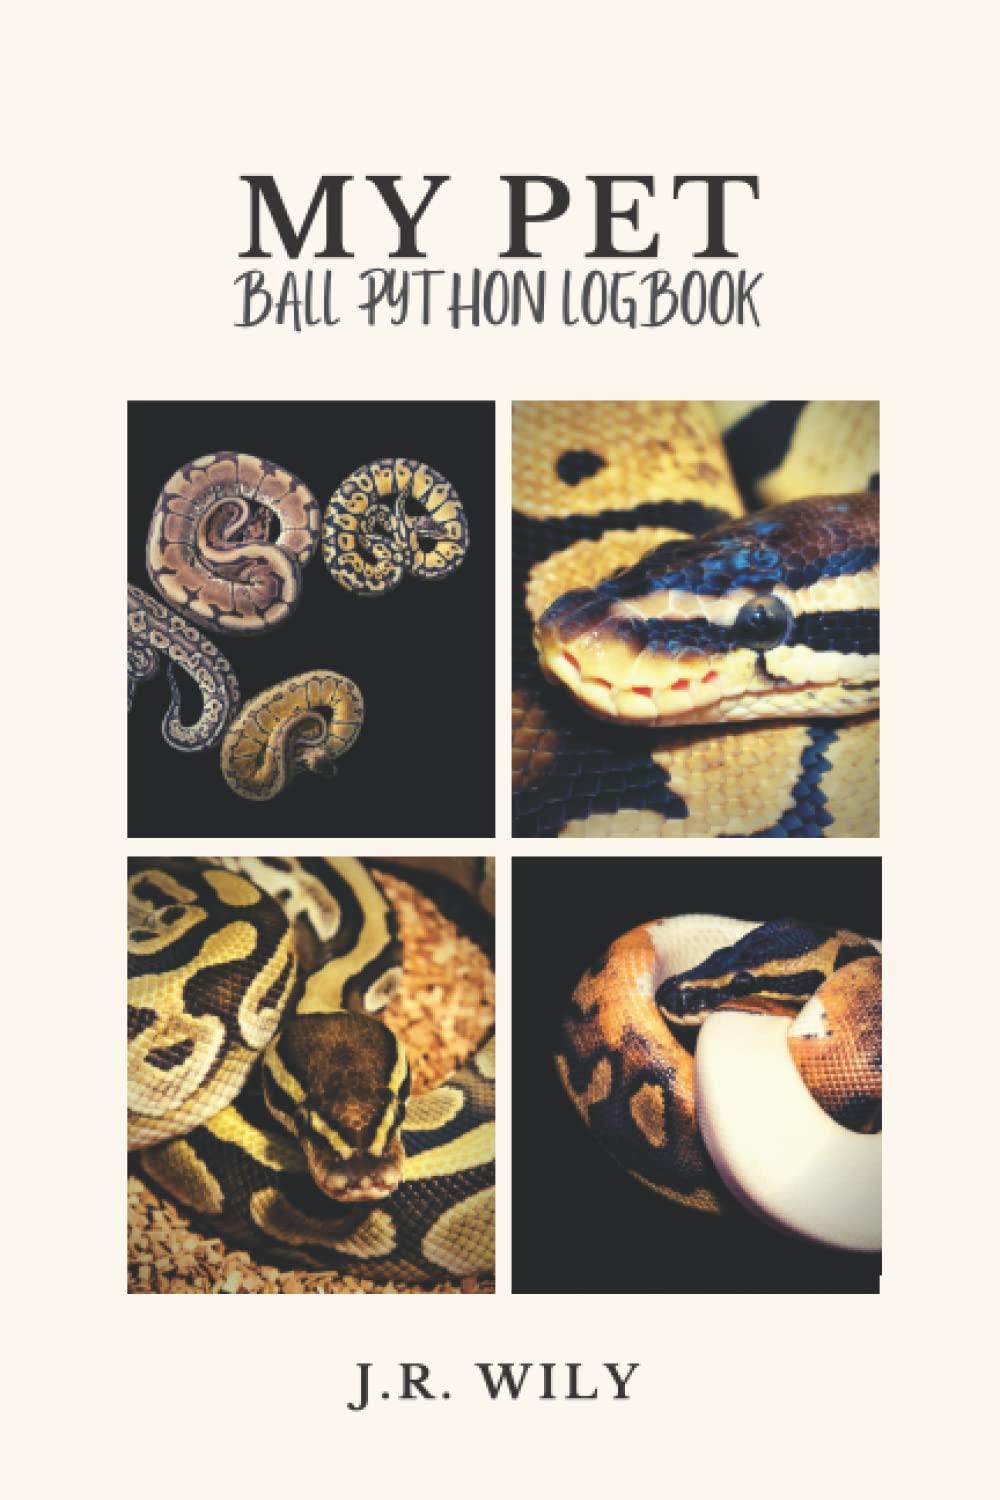 My Pet Ball Python Logbook